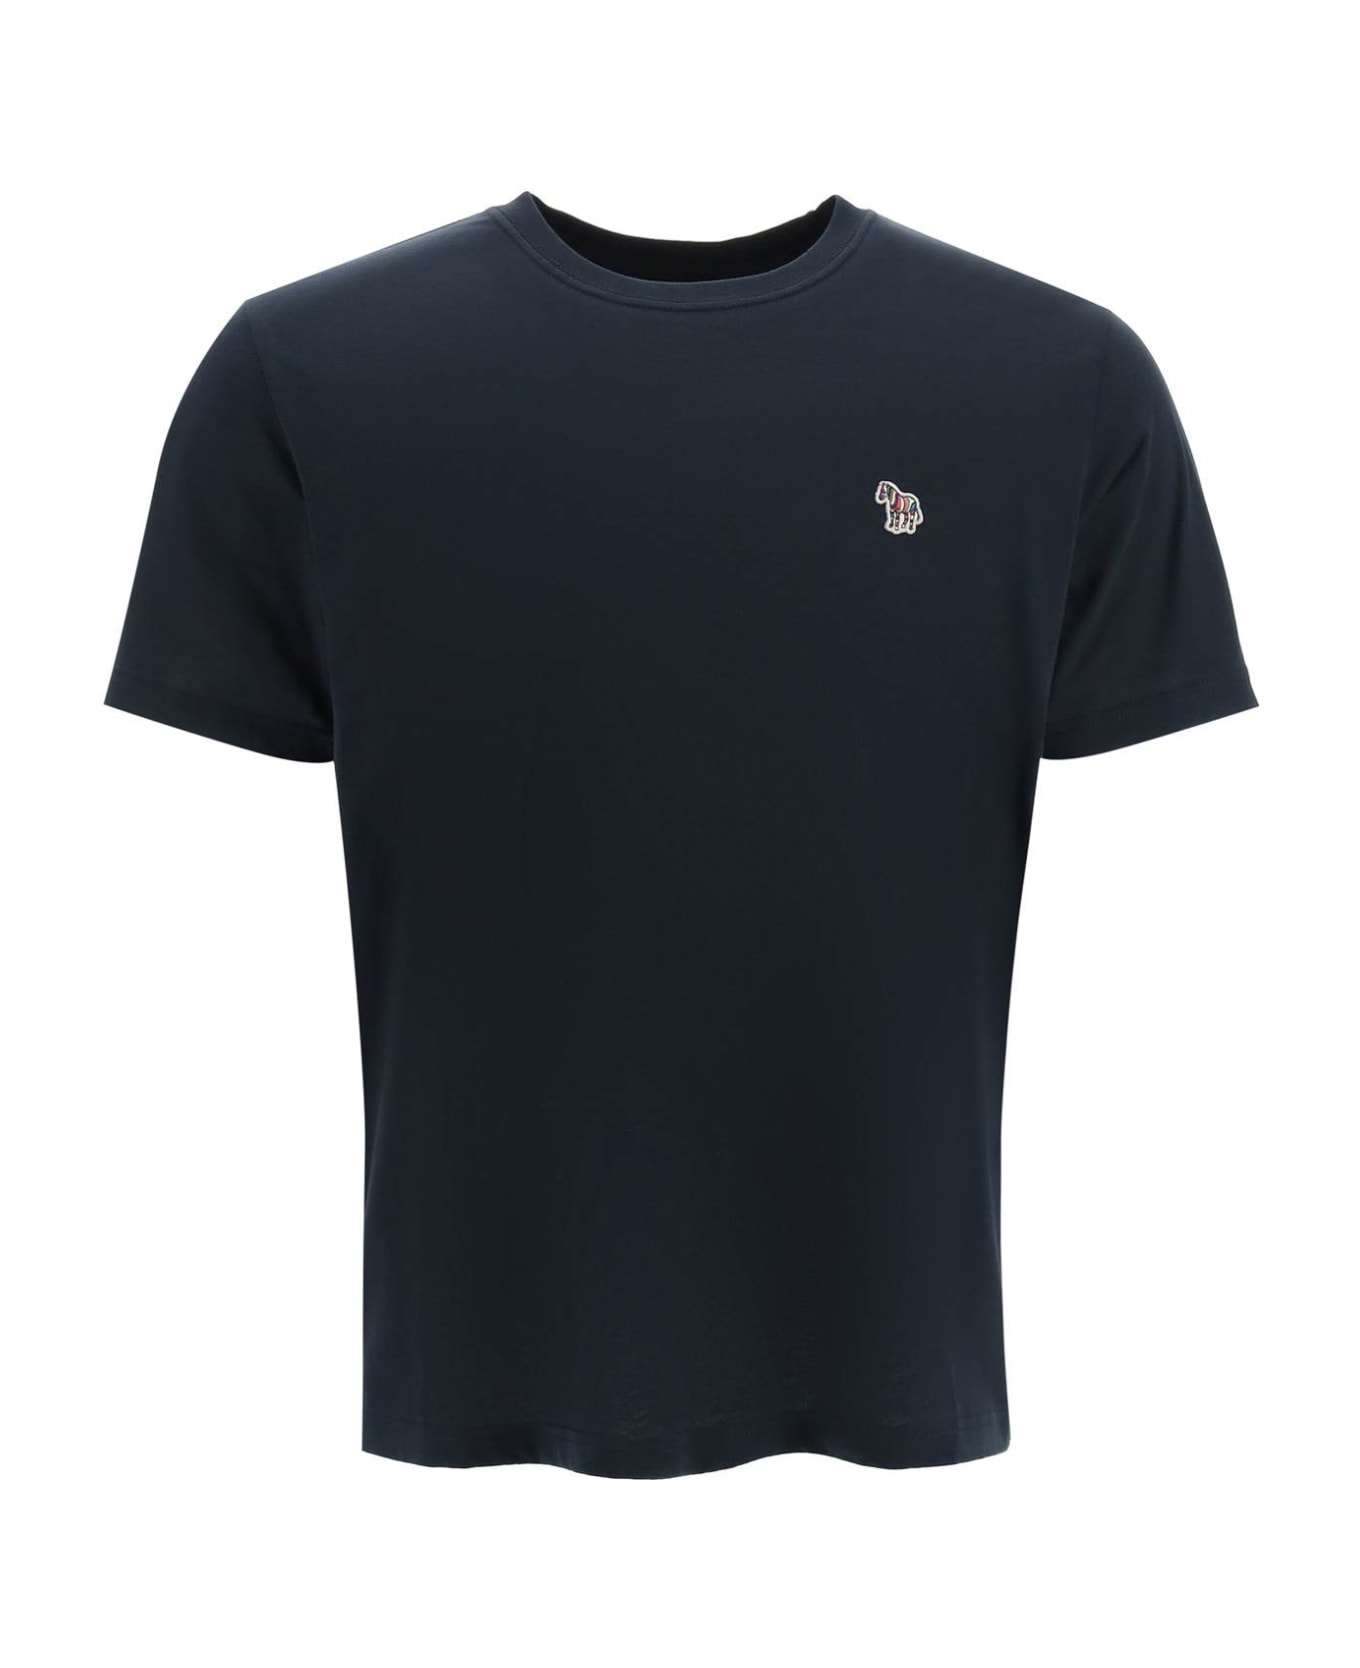 PS by Paul Smith Organic Cotton T-shirt - VERY DARK NAVY (Blue)